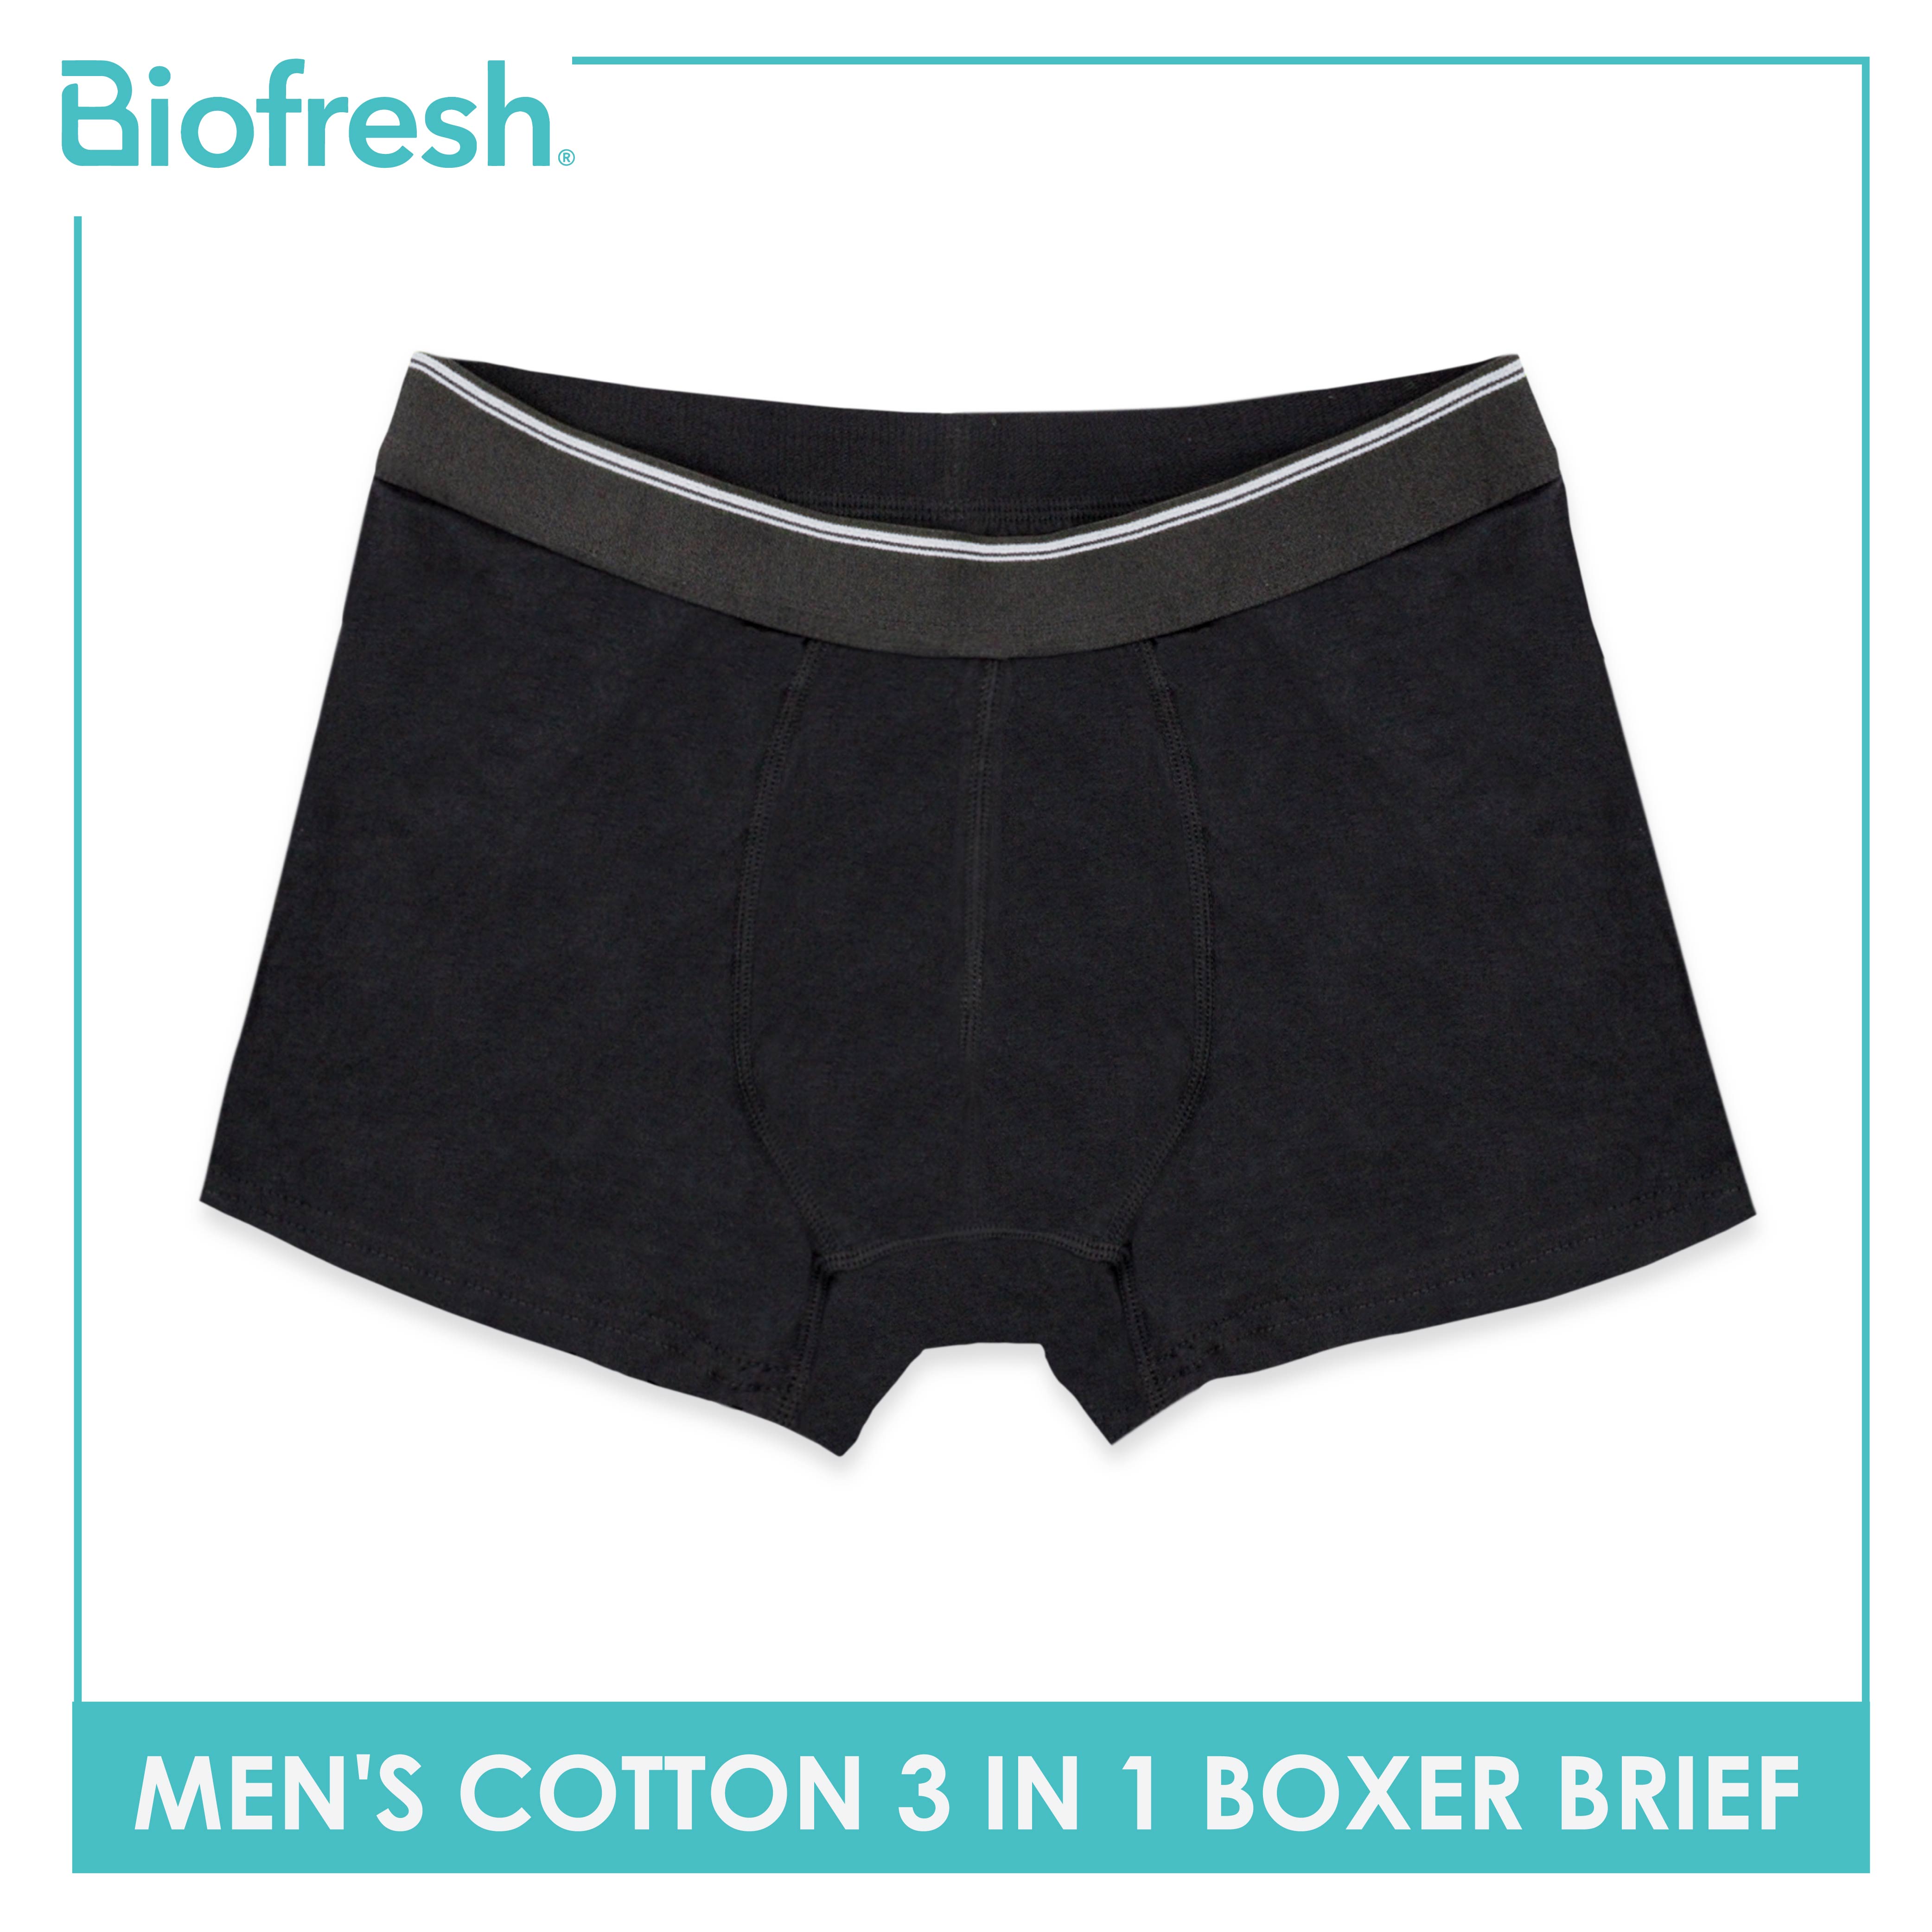 Biofresh UMBKG0101 Men's Antimicrobial Cotton Brief 3 pieces in a